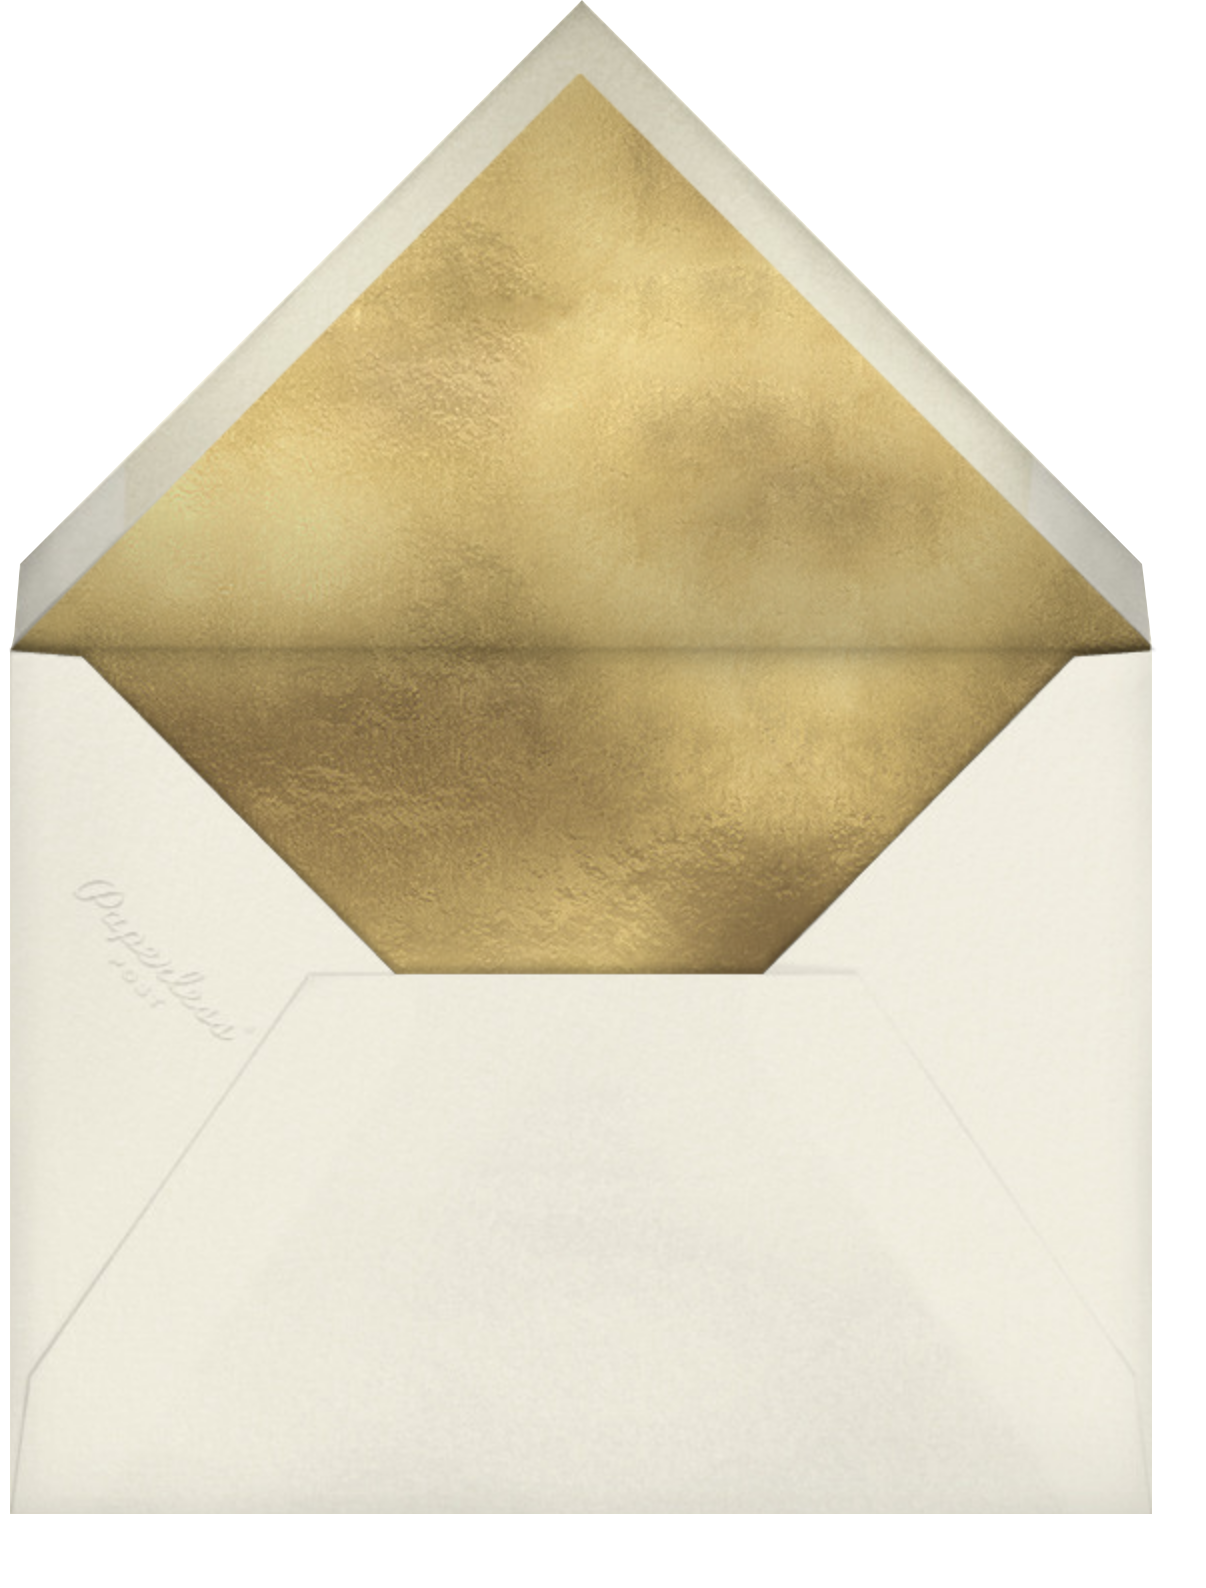 Starry Village (Blance Goméz) - Red Cap Cards - Envelope